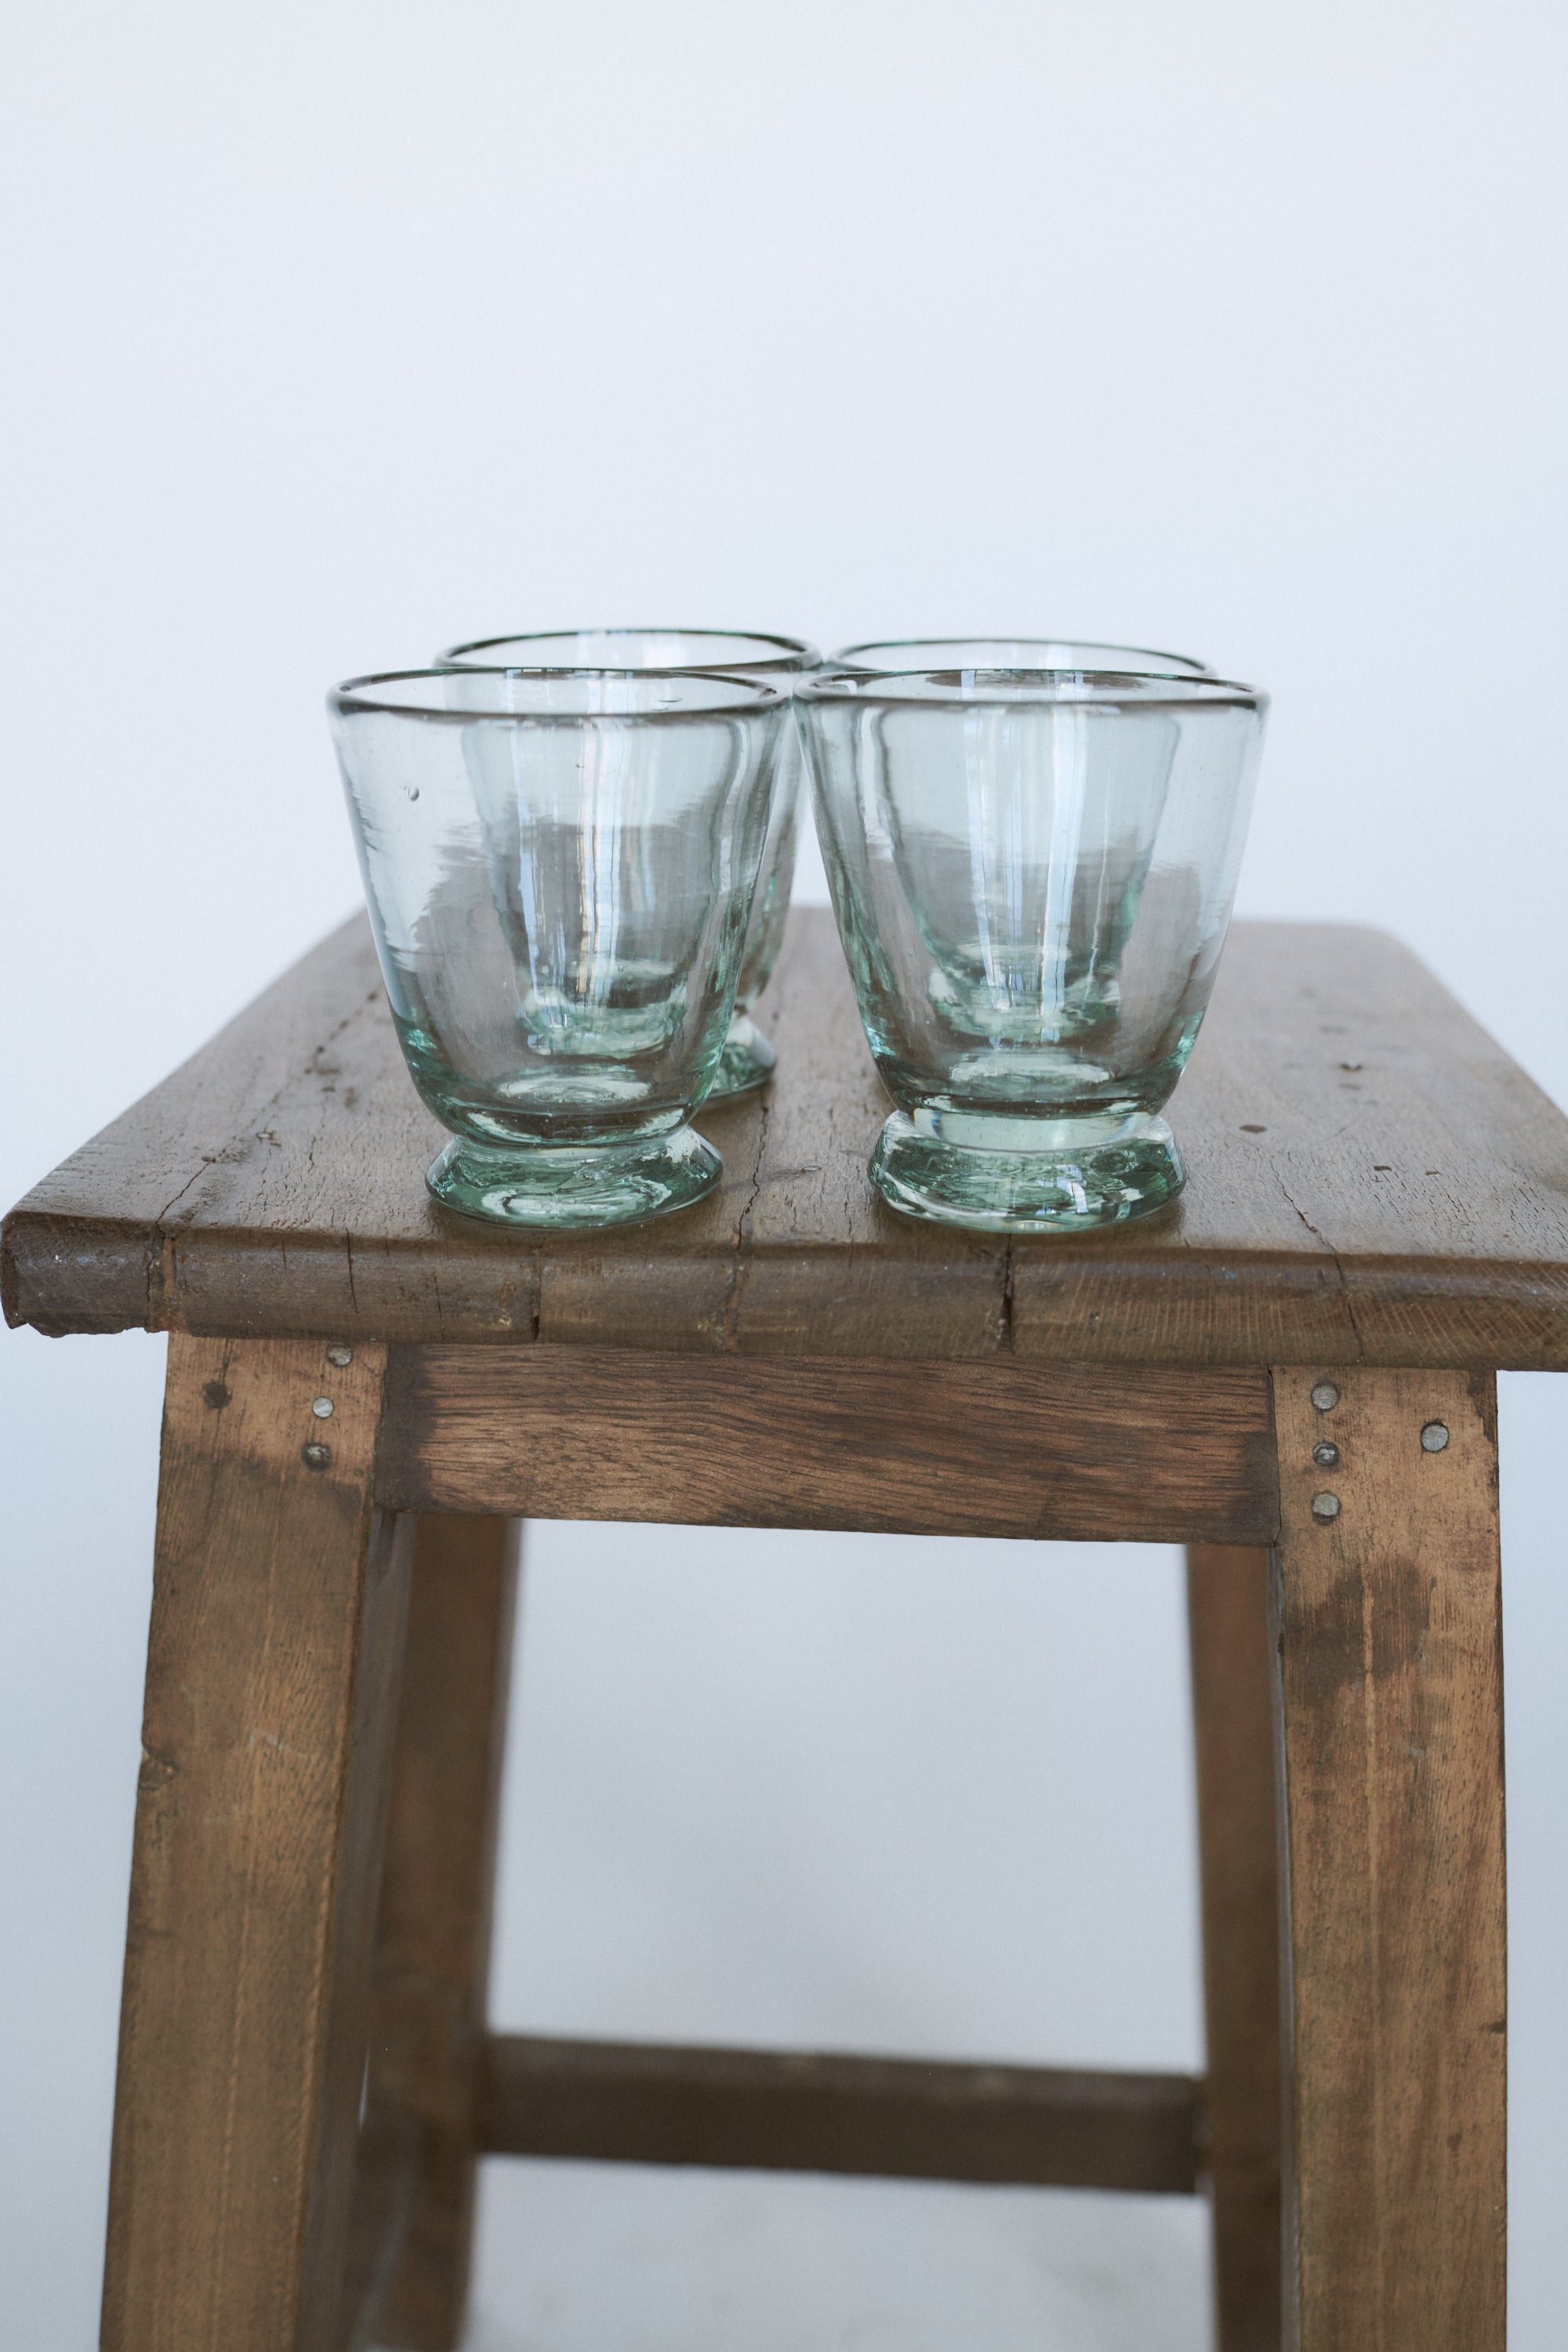 Øgaard Hand Blown Glass Cup - Desert Vintage